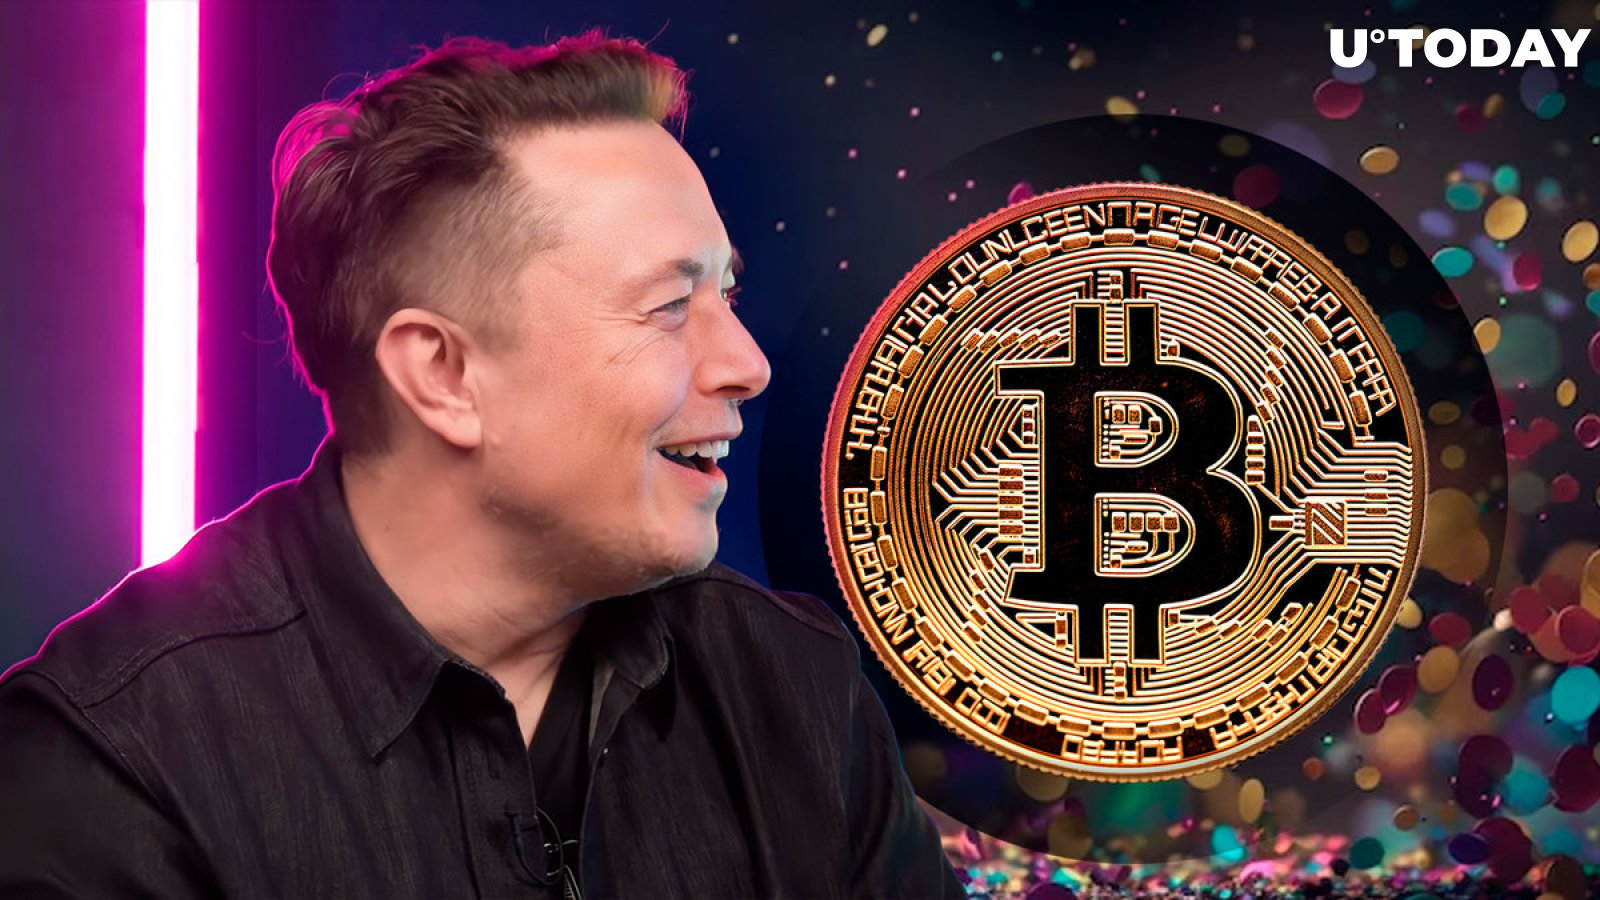 Elon Musk Becomes Bitcoiner - Crypto Community Celebrates 3-Year Anniversary